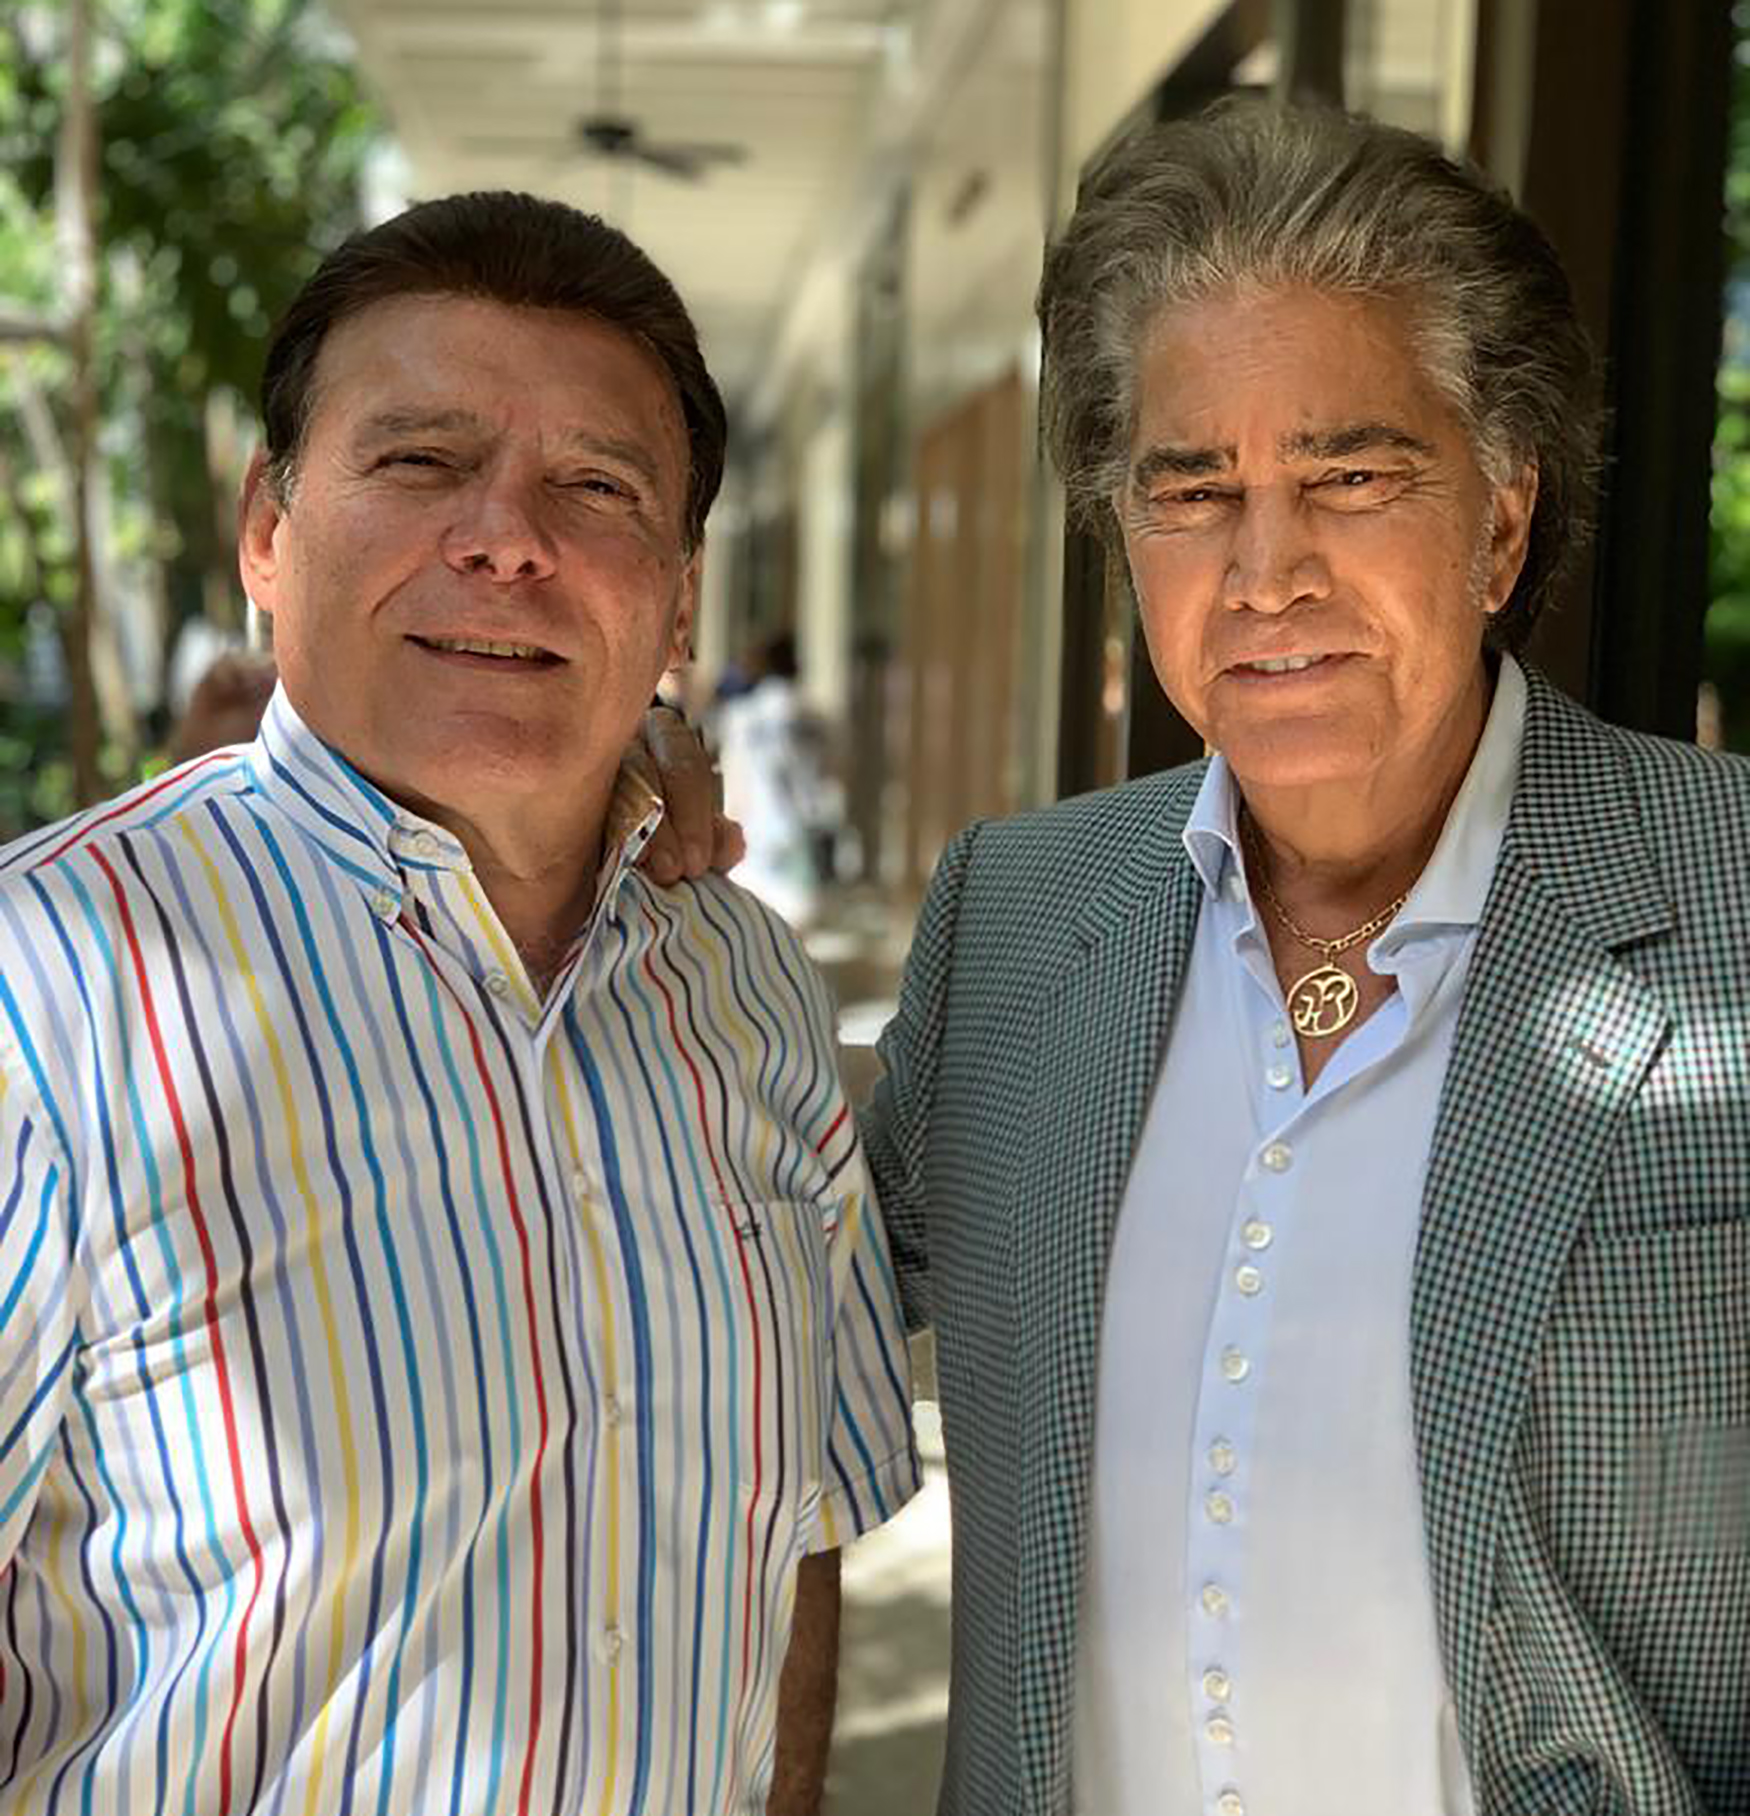 Raimundo Santamarta and José Luis Rodríguez